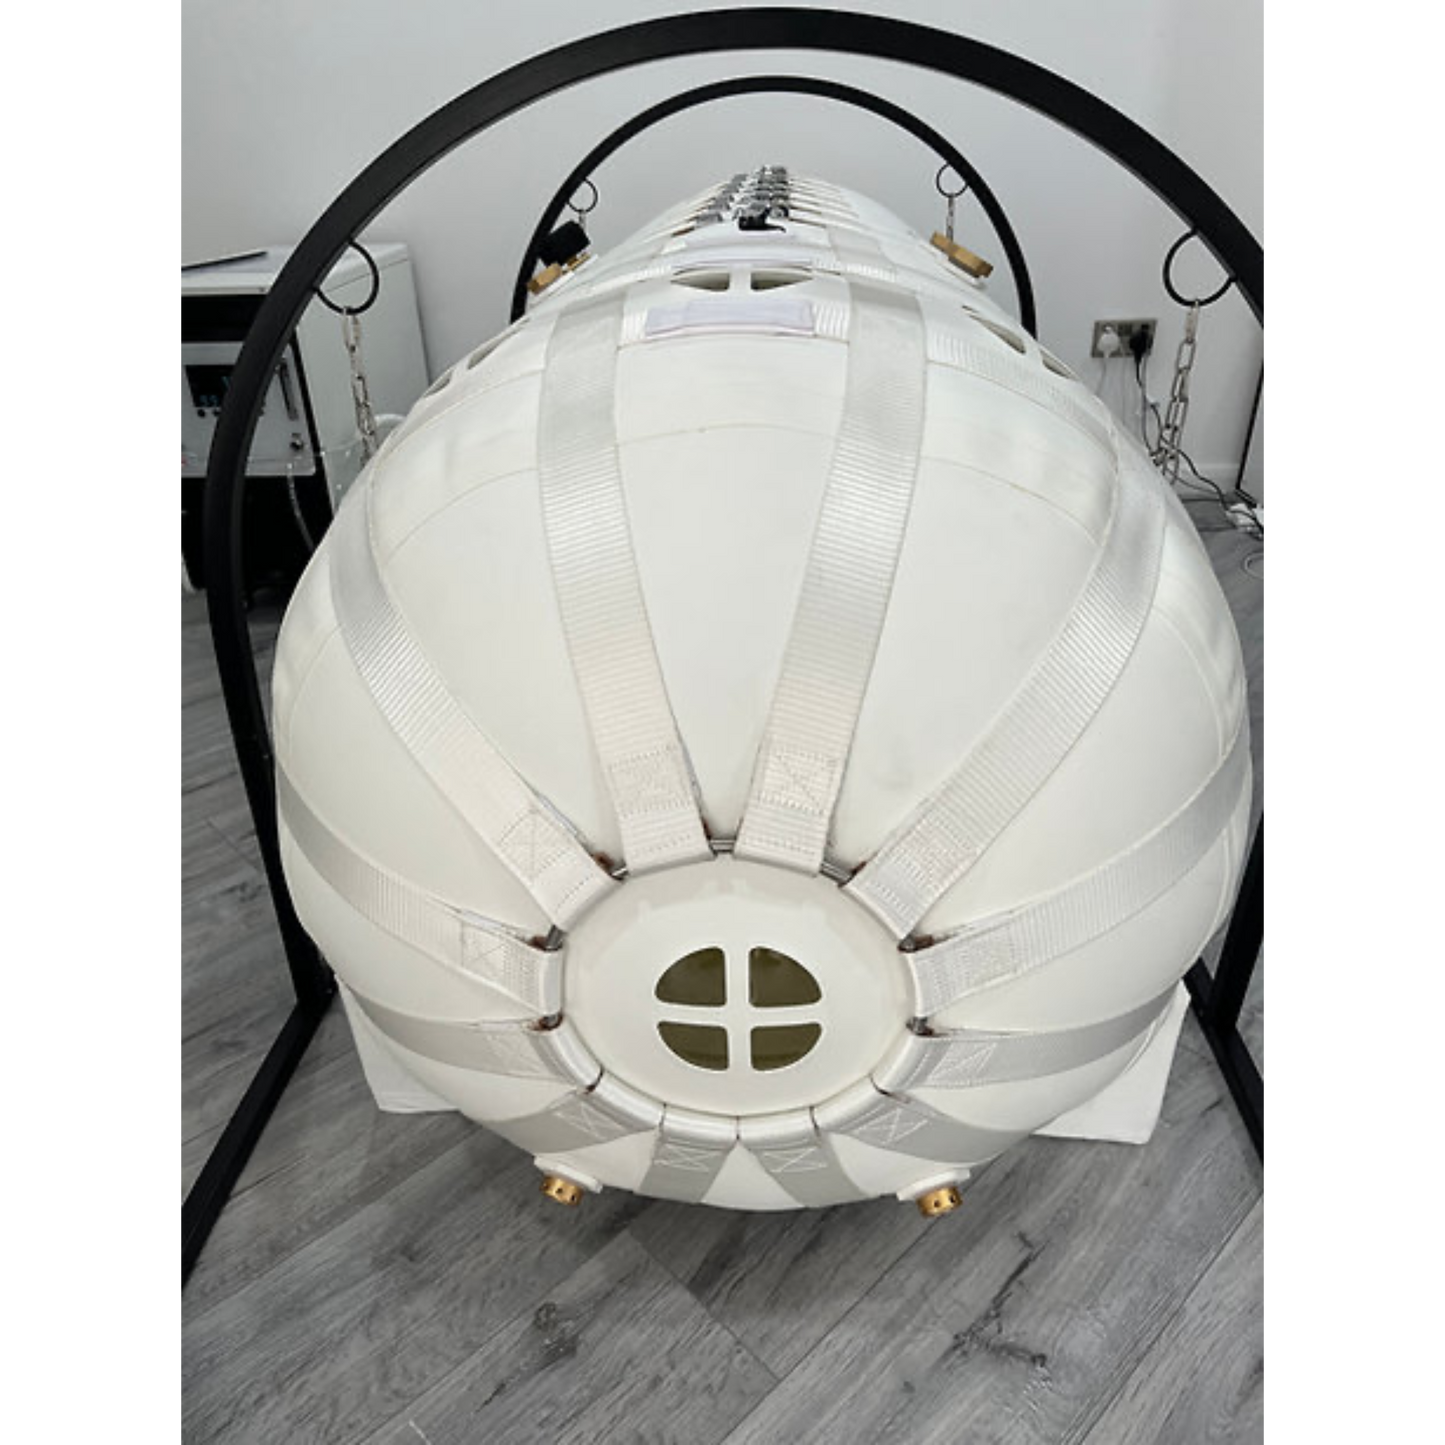 Hyperbaric Oxygen Chamber 2.0 ATA Pro LARGE